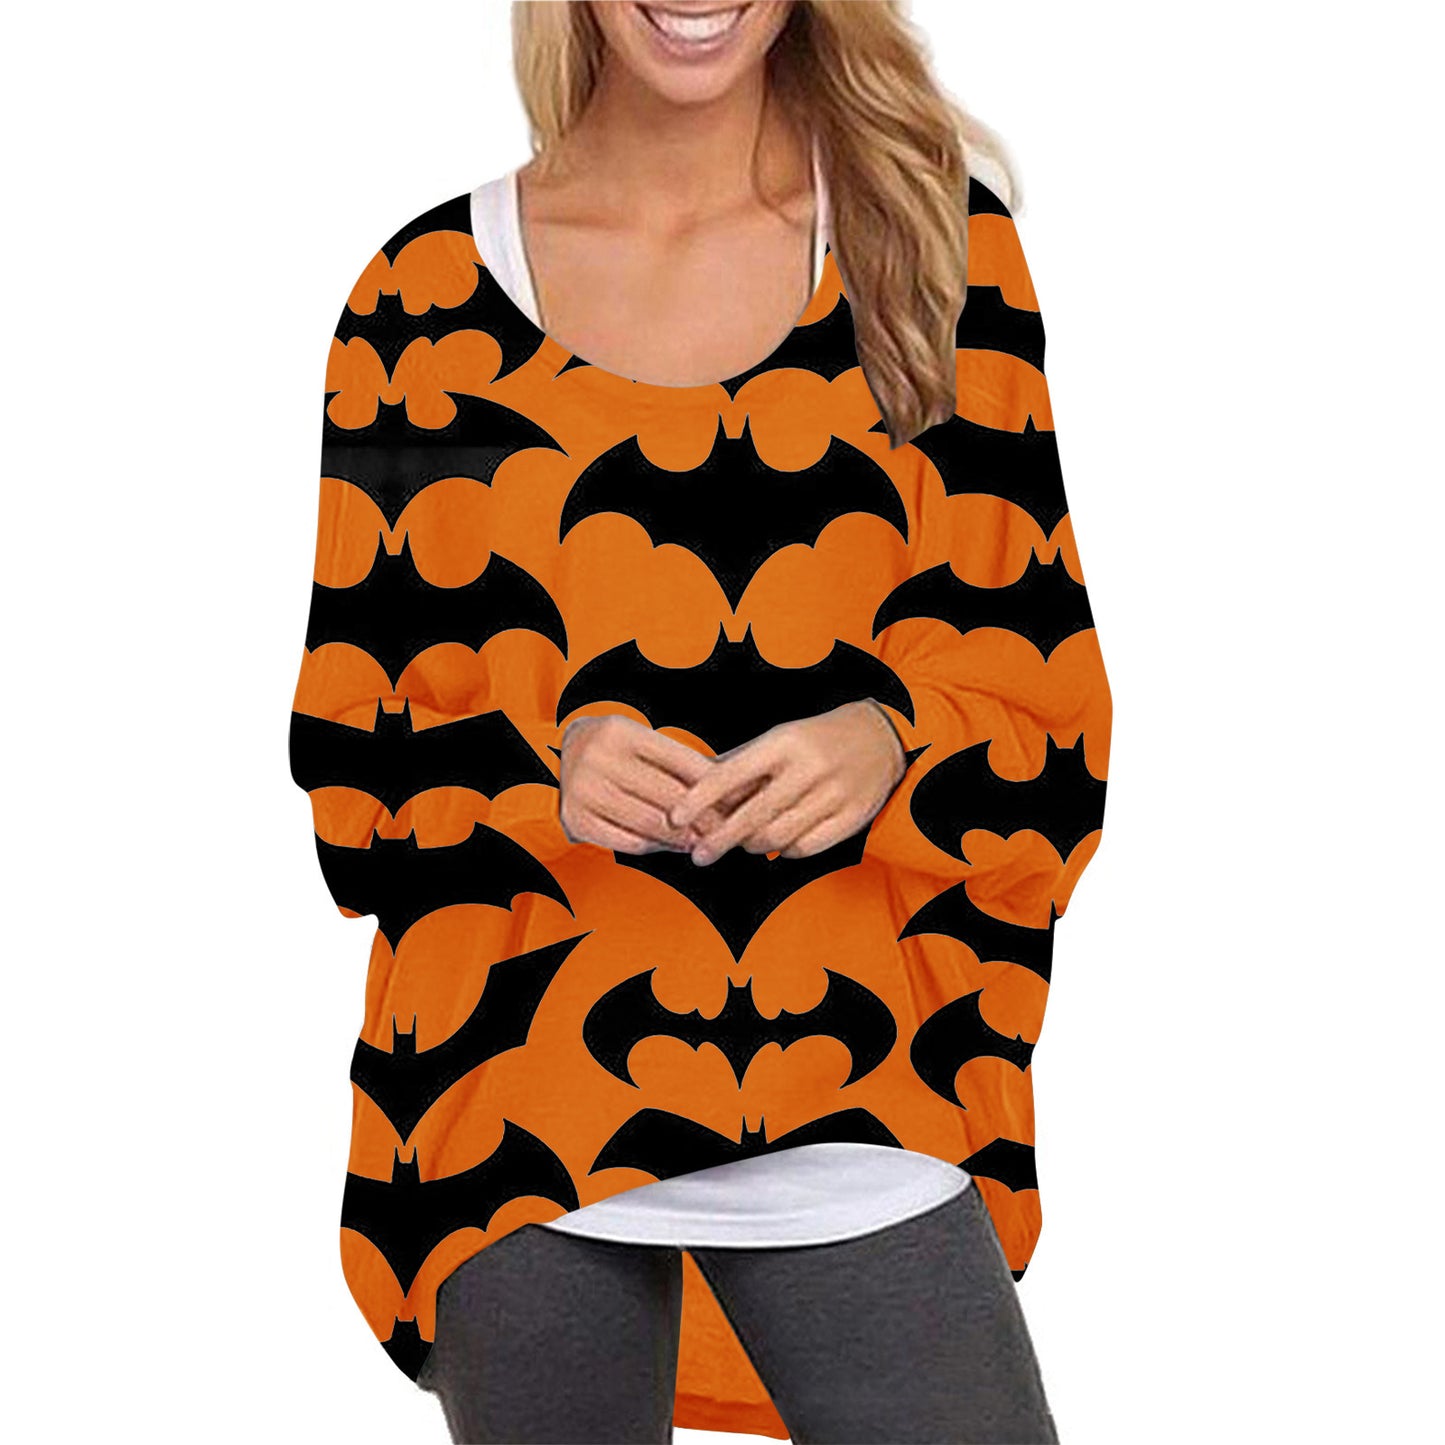 Women Halloween Pumpkin Print Long Sleeves Tops-For Halloween-Bat-S-Free Shipping at meselling99